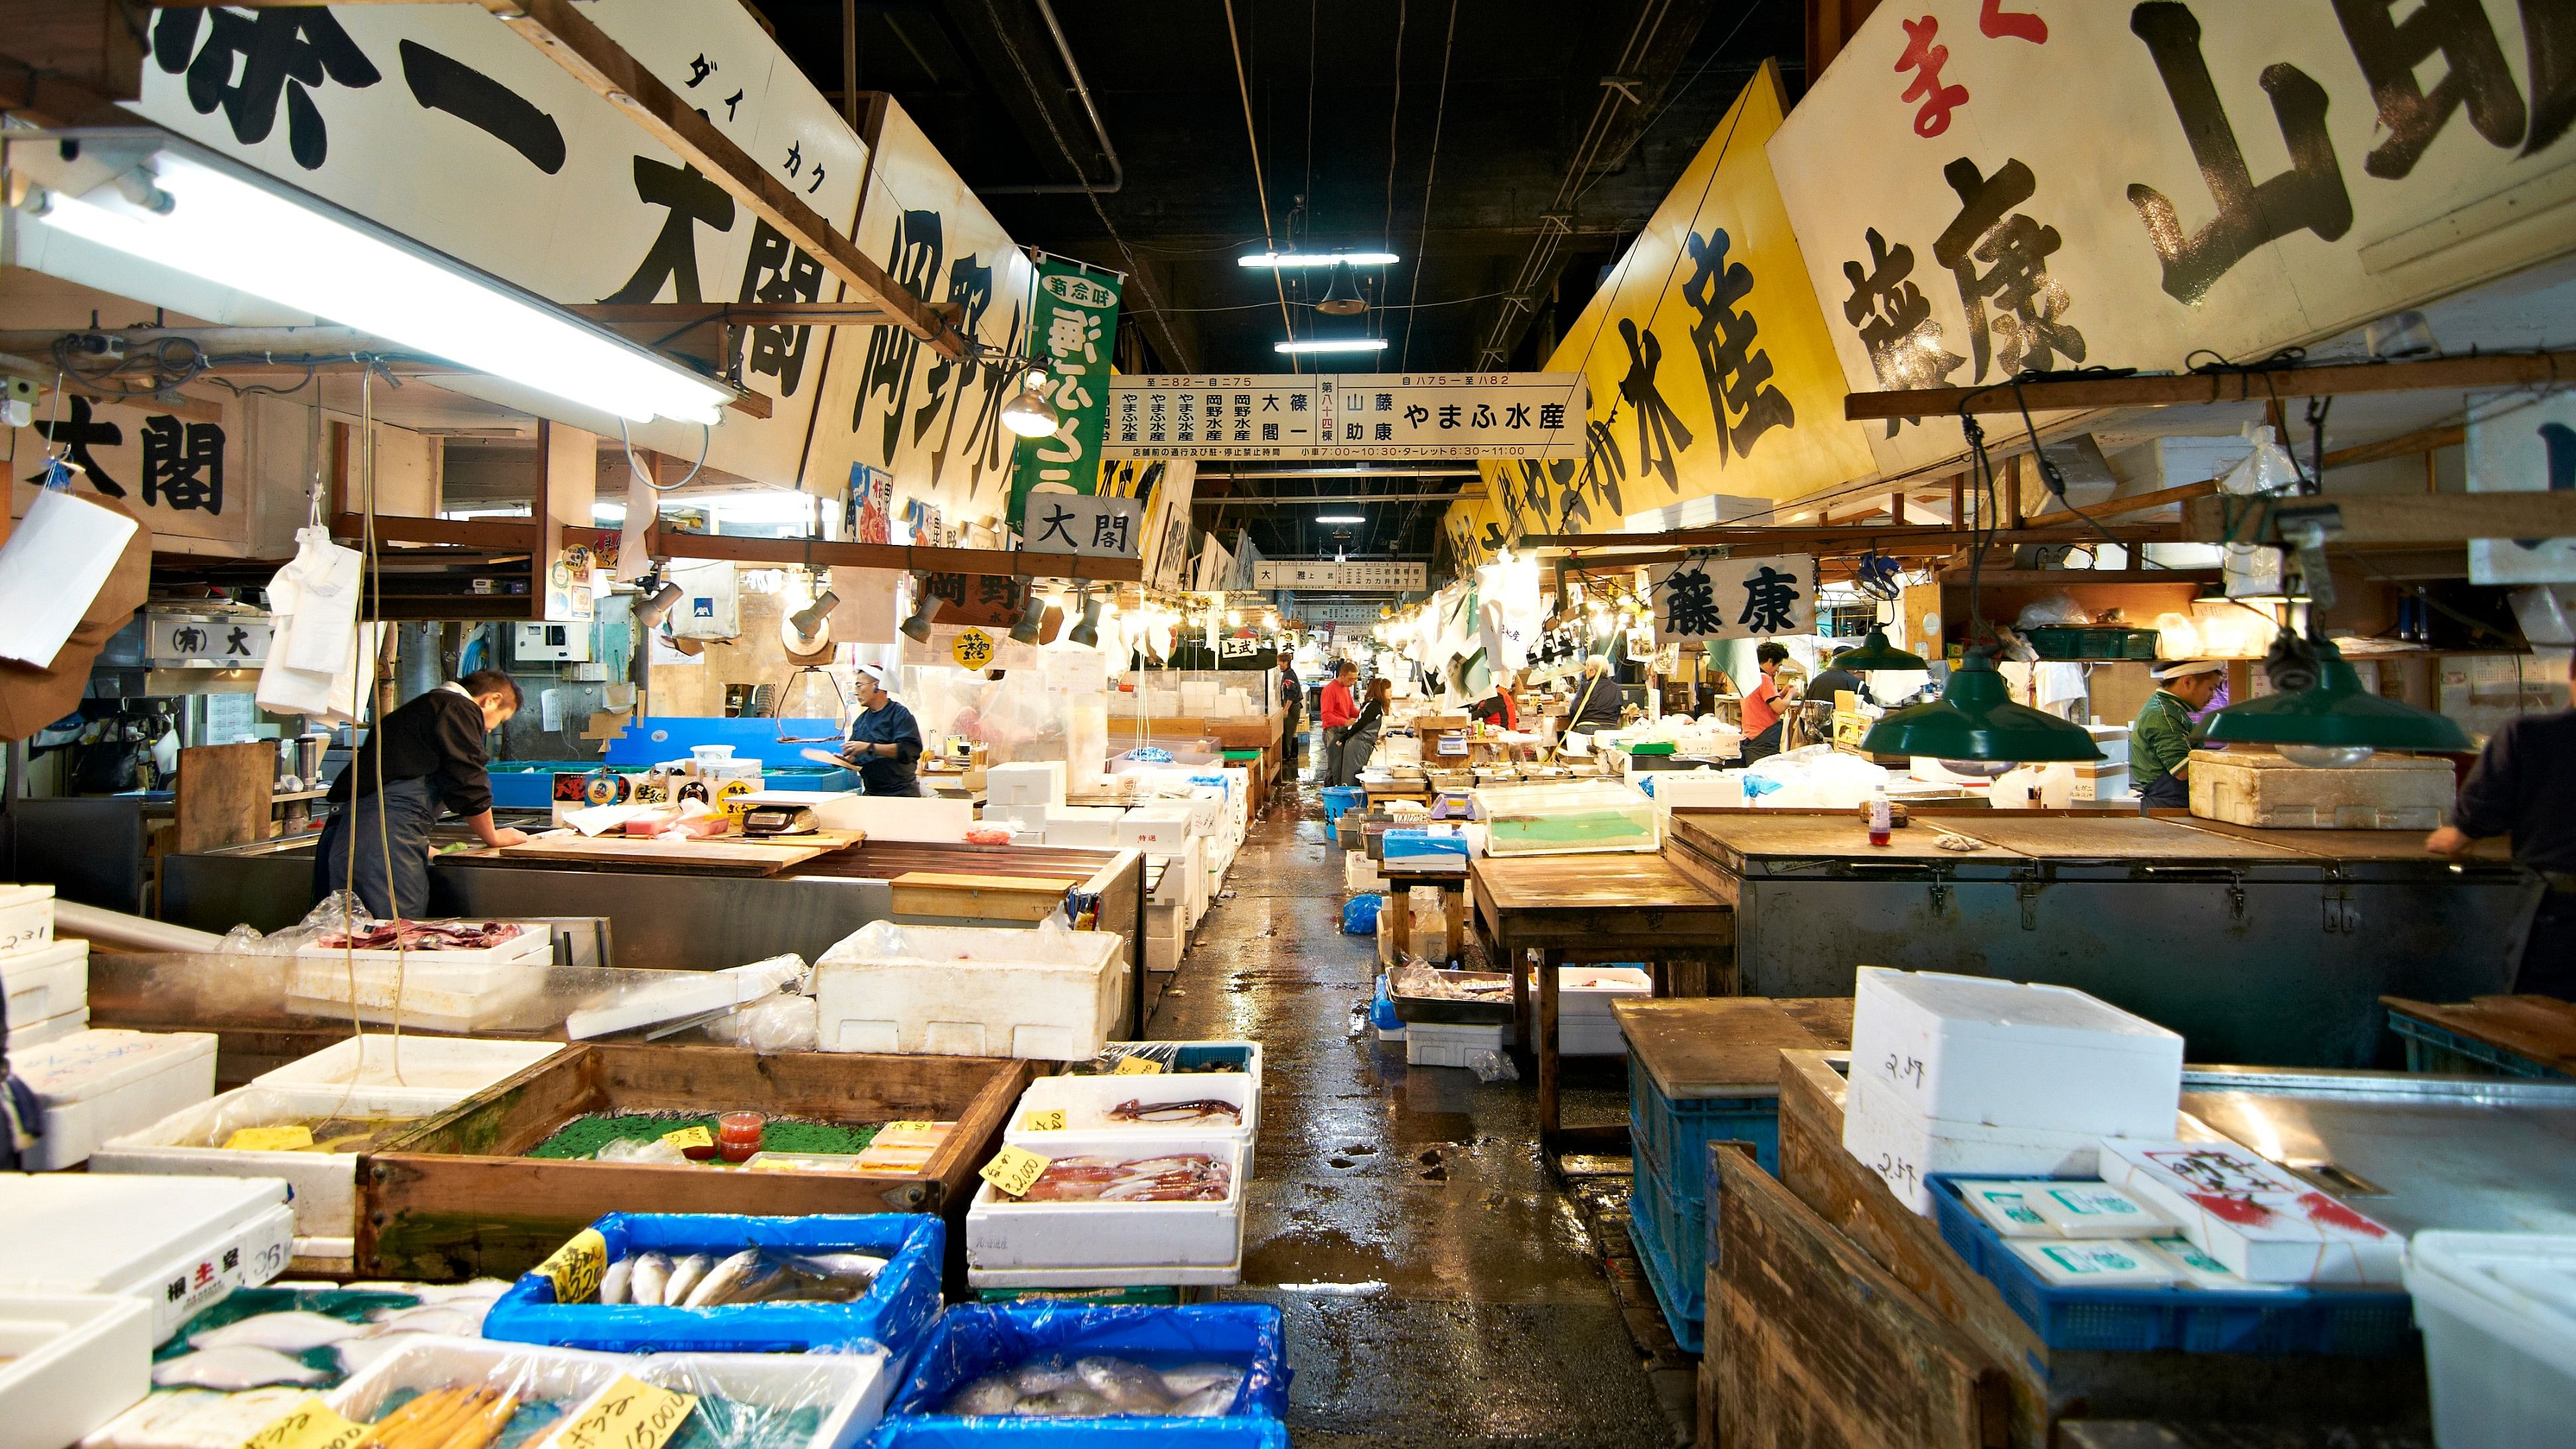 <div class="paragraphs"><p>representative image of a seafood market in Japan.</p></div>